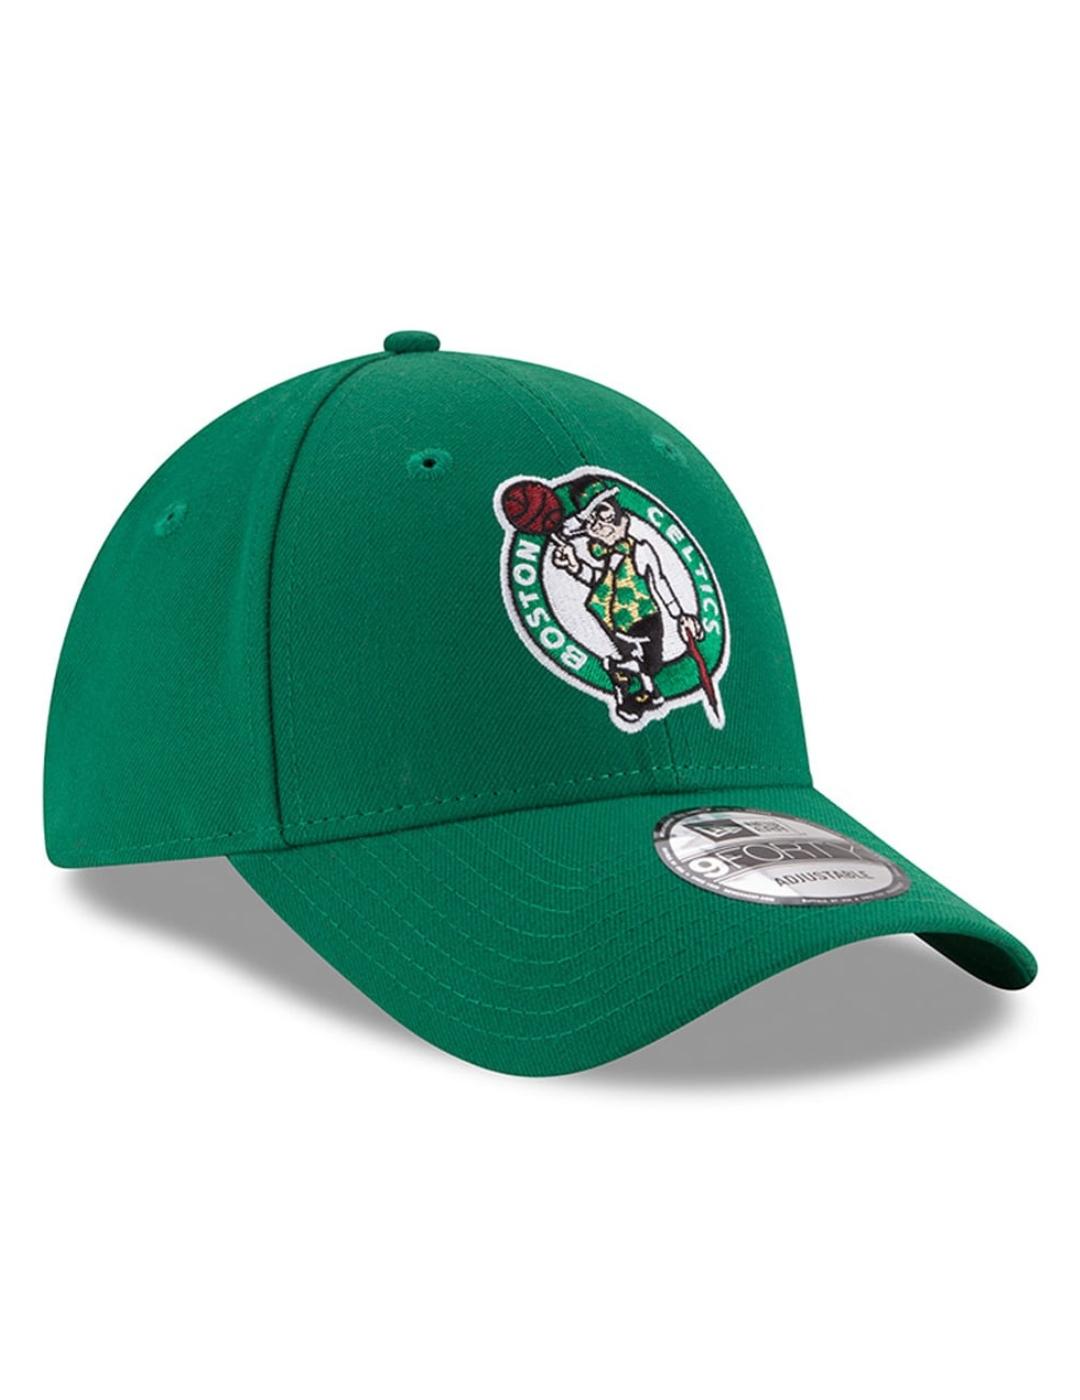 Gorra New Era Boston Celtics verde de hombre.